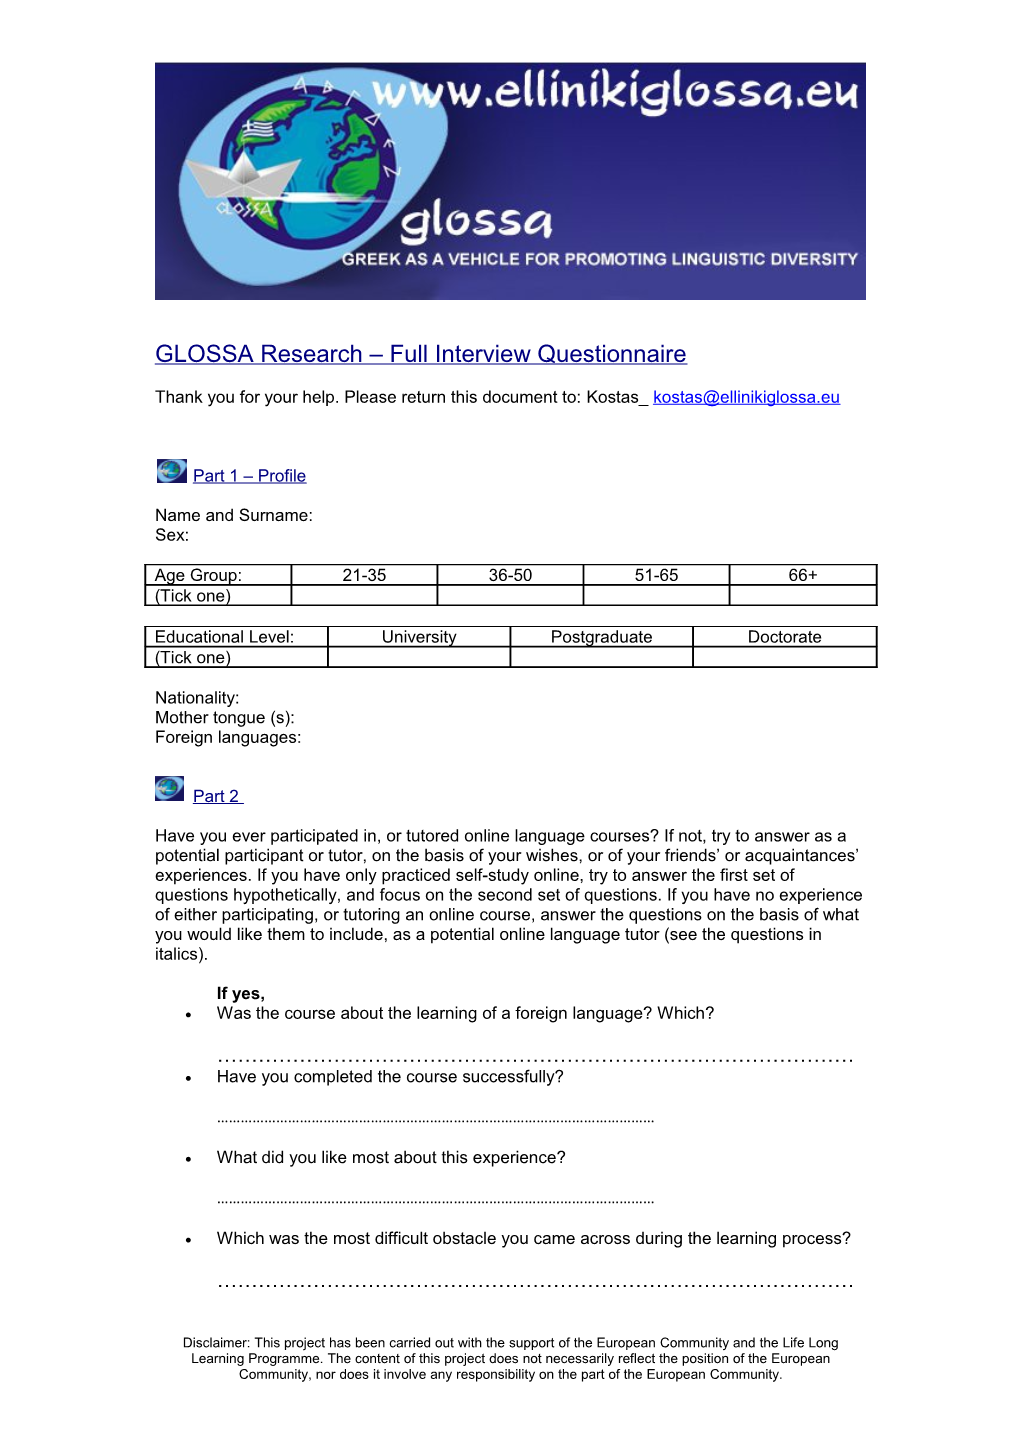 GLOSSA Research Short Questionnaire